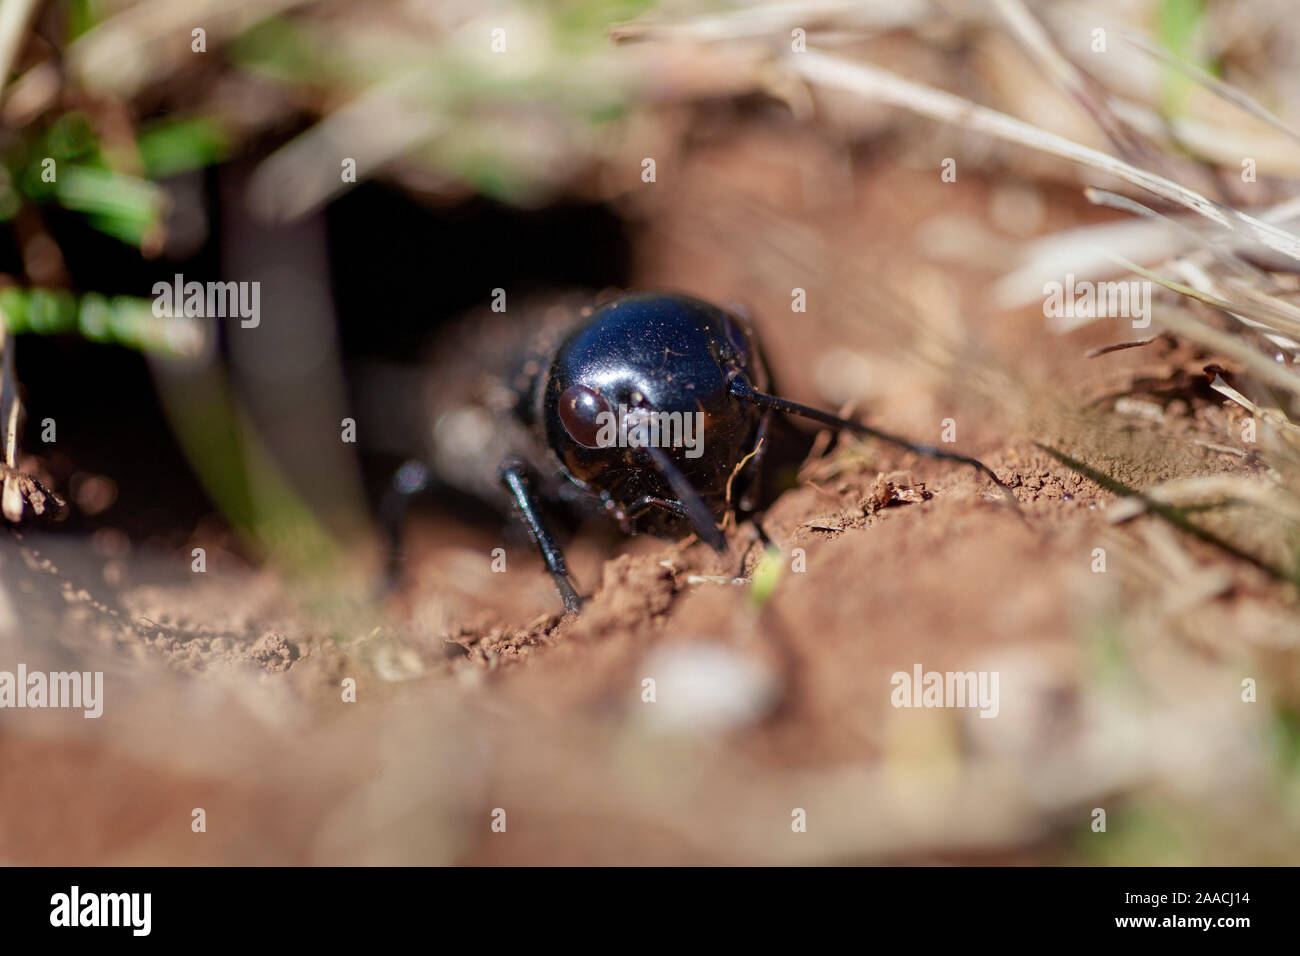 The cricket in the burrow, Velebit mountain, Croatia Stock Photo